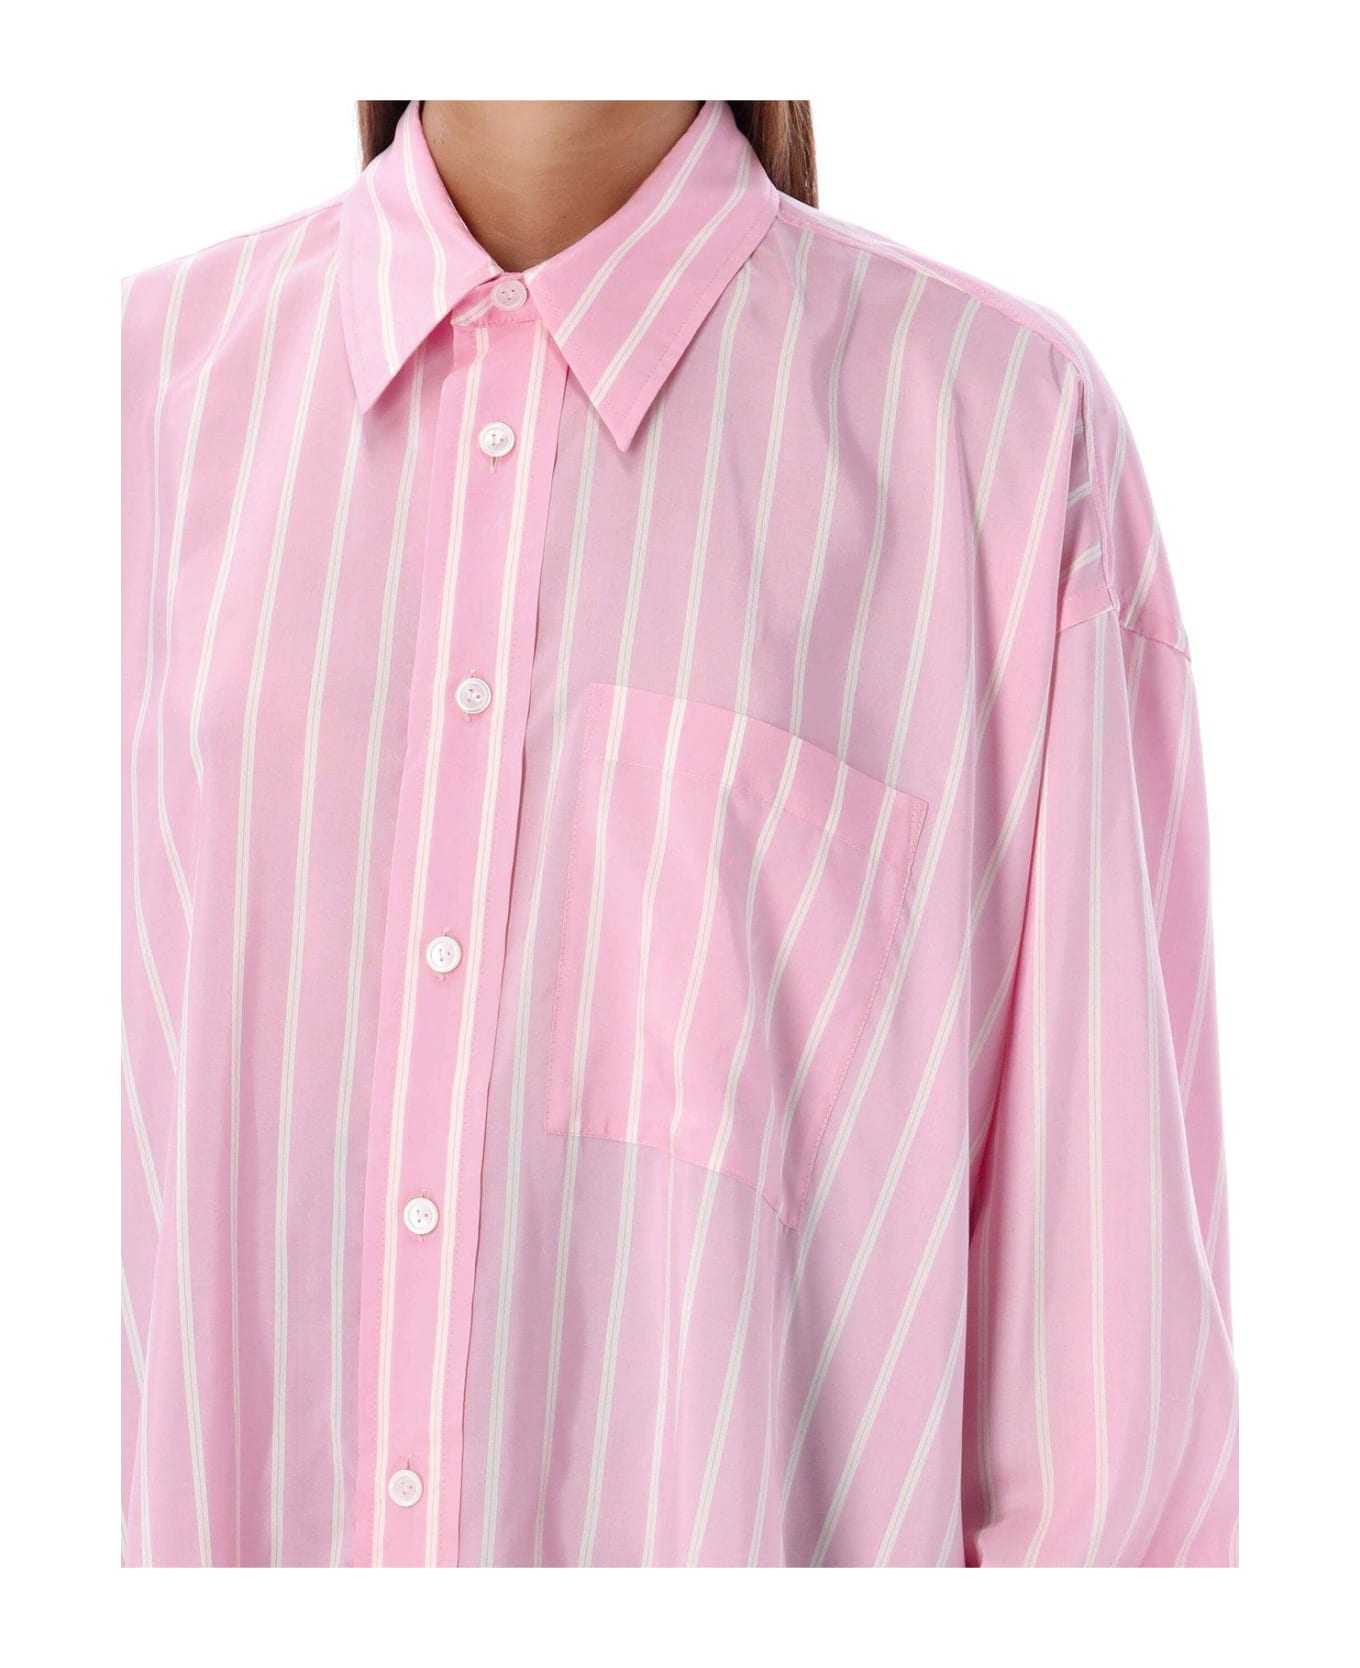 Bottega Veneta Silk Shirt With Striped Pattern - PINK STRIPES